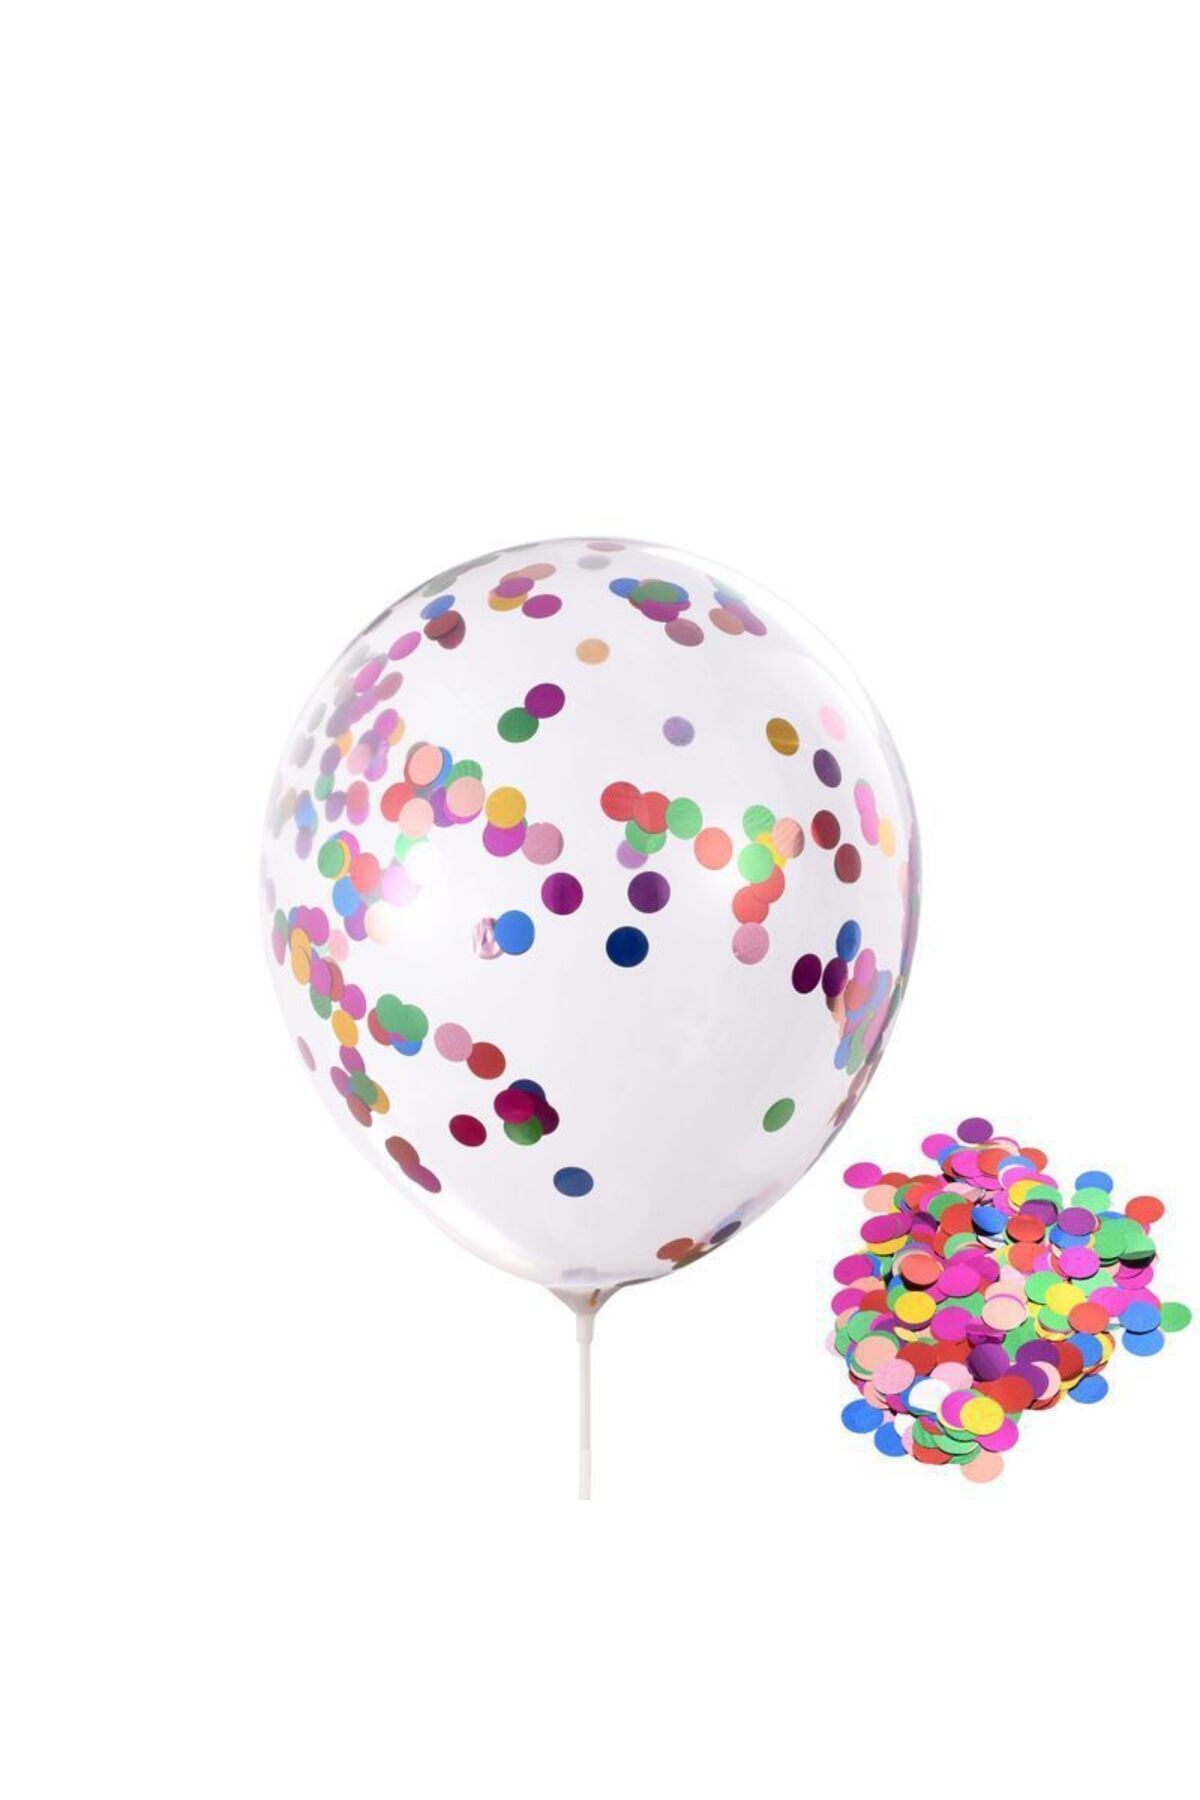 pazariz Pazarız Konfetili Balon Pullu Şeffaf Balon Seti 30 Adet